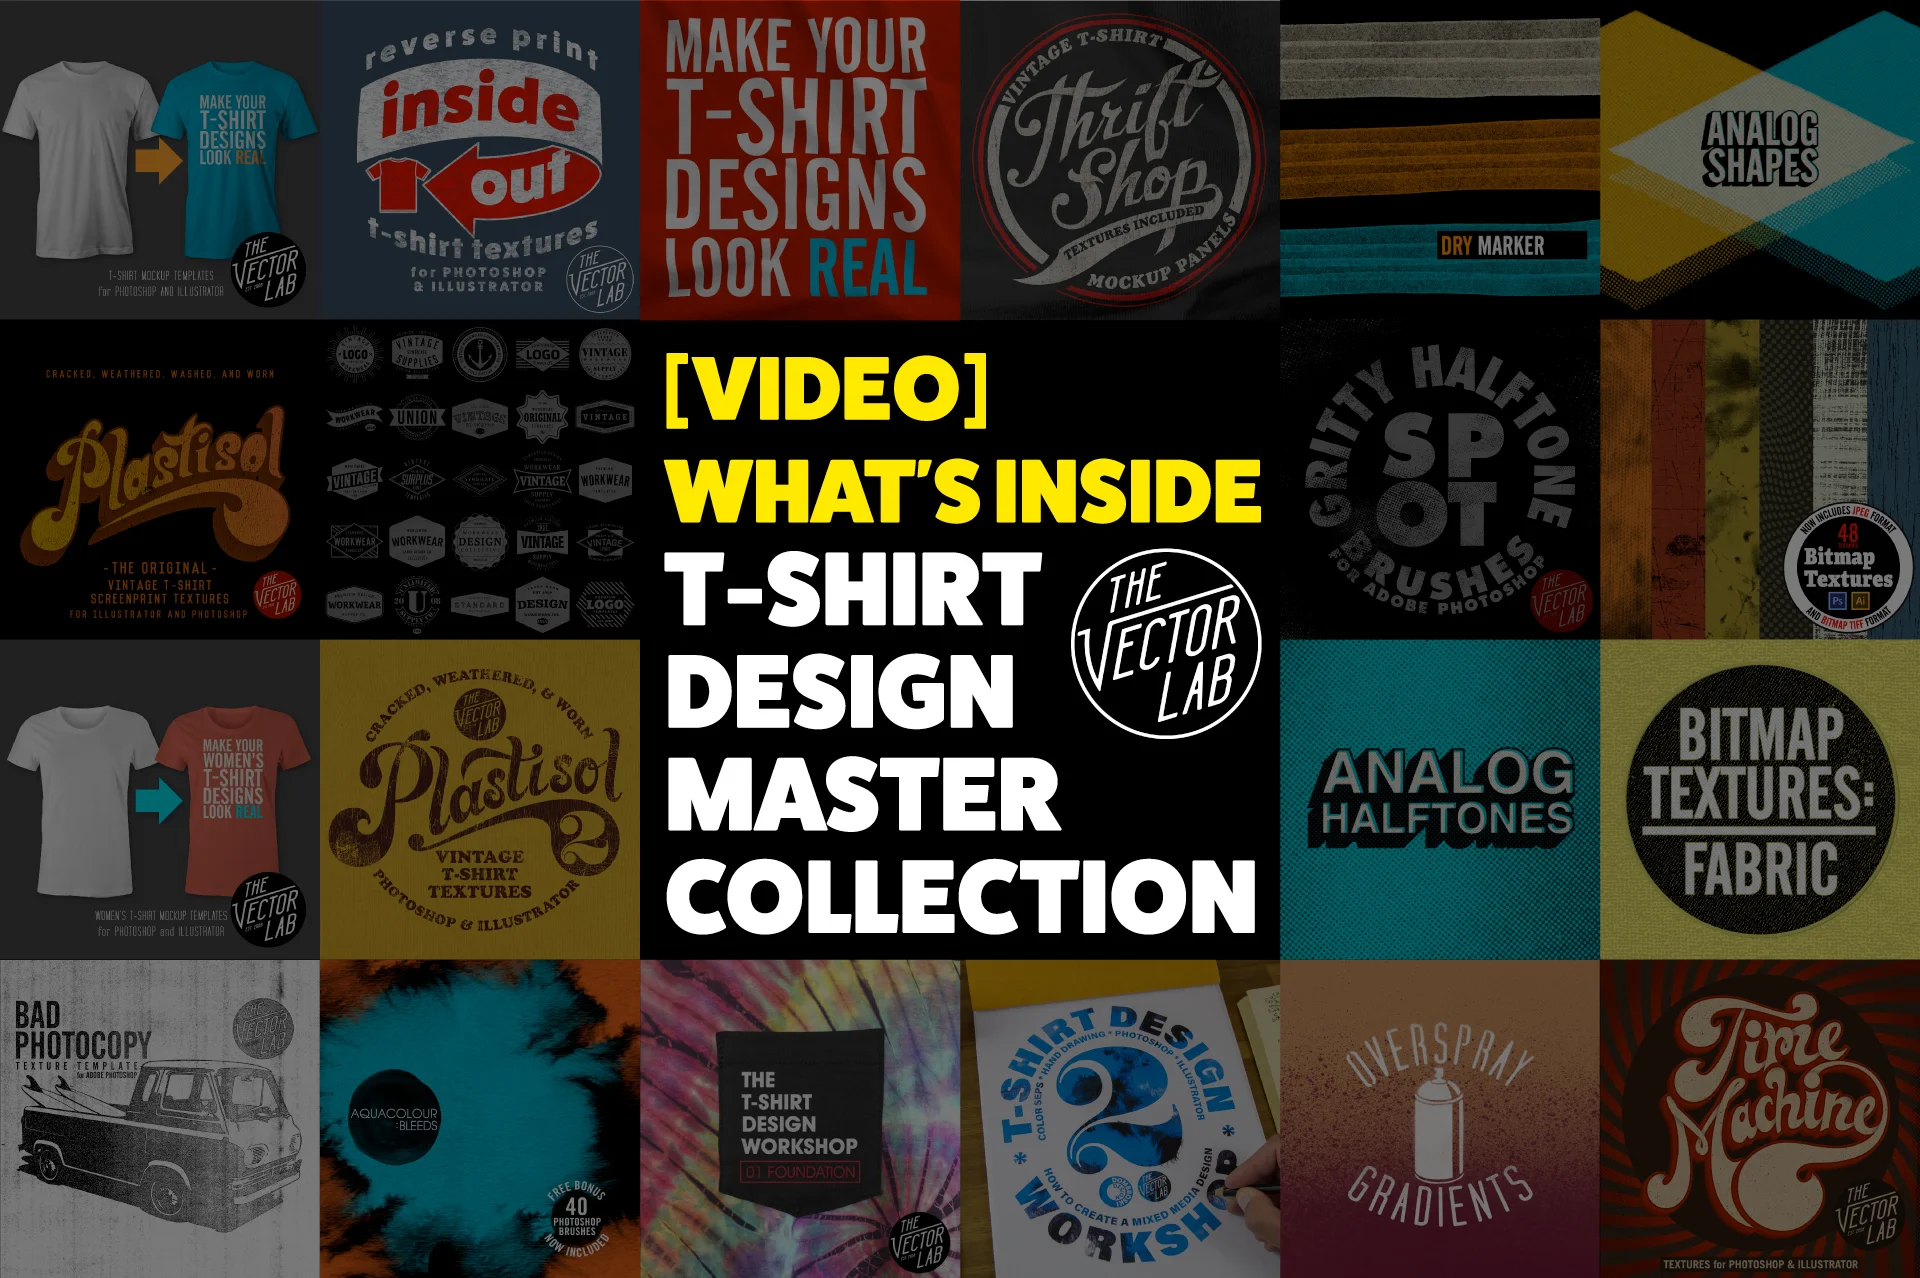 T-Shirt Design Master Collection on Vimeo